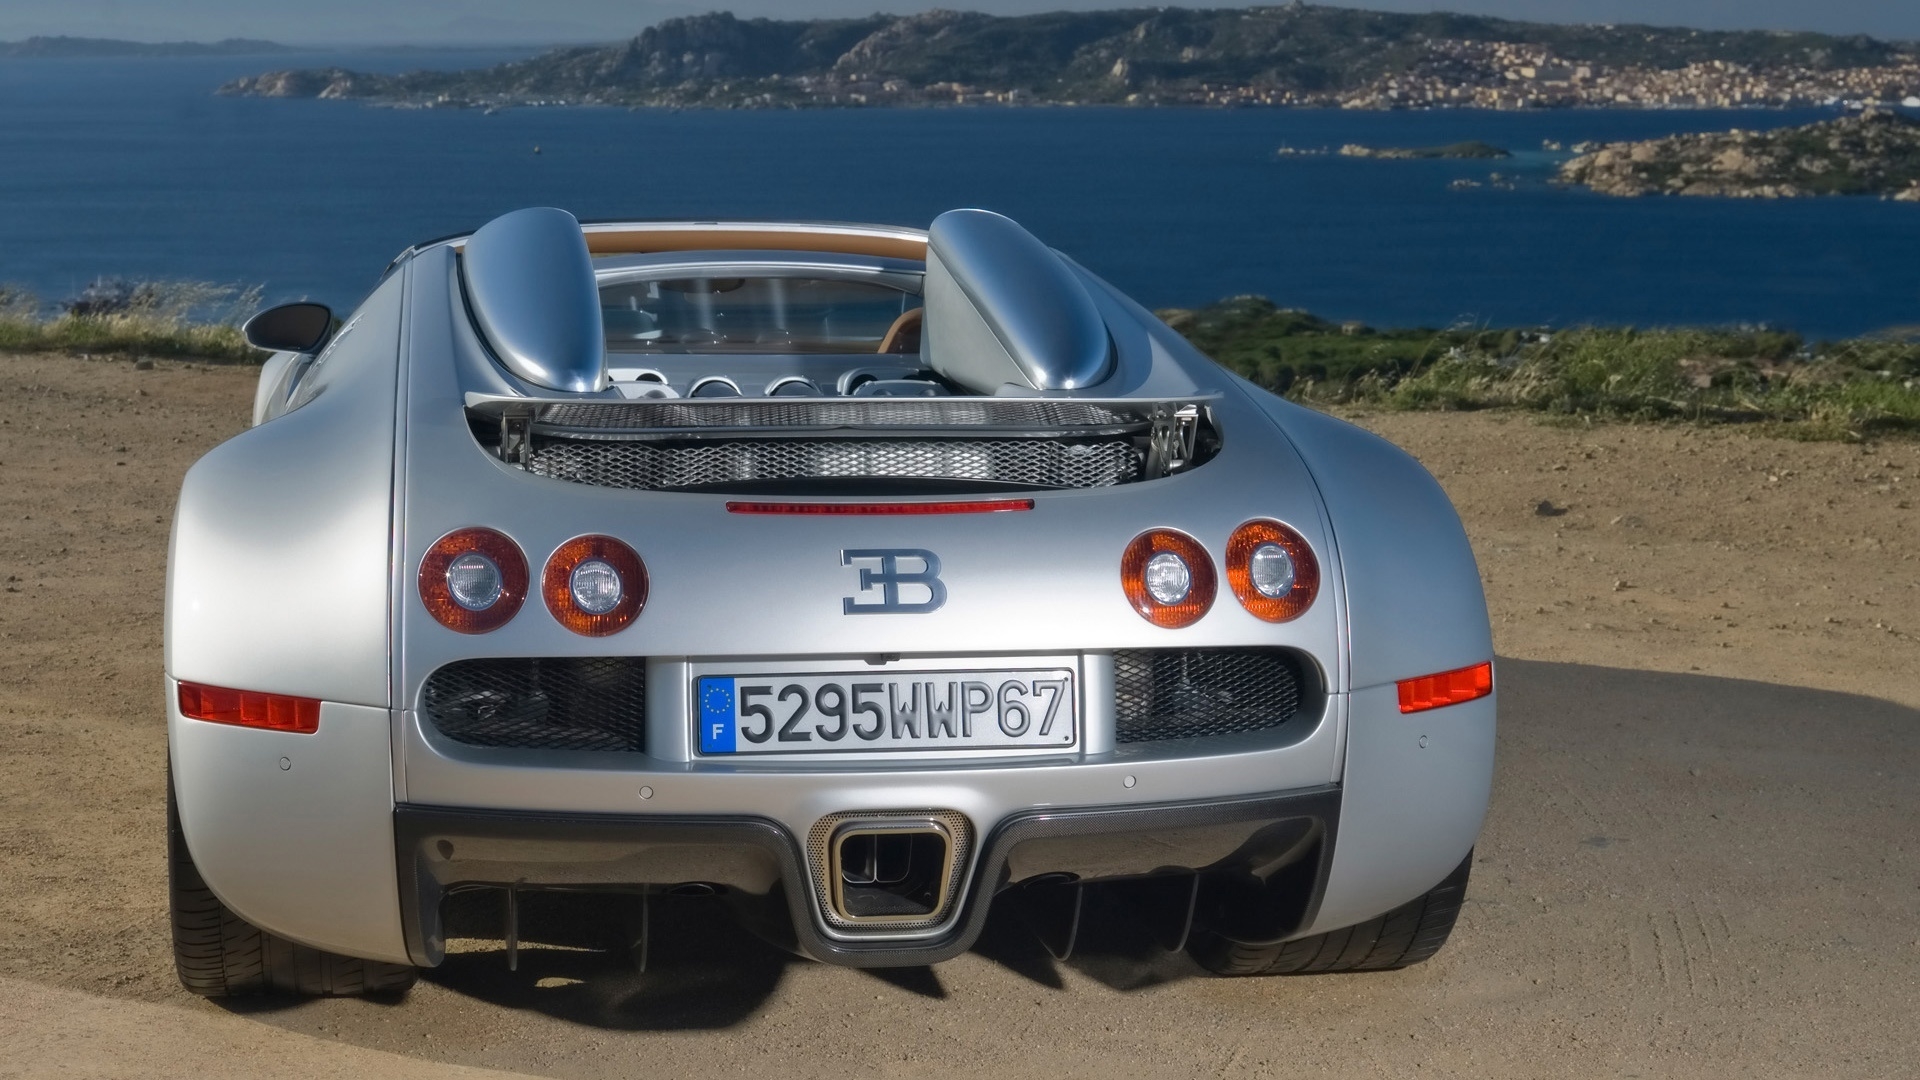 Bugatti Veyron 16.4 Grand Sport in Sardinia 2010 - Rear for 1920 x 1080 HDTV 1080p resolution